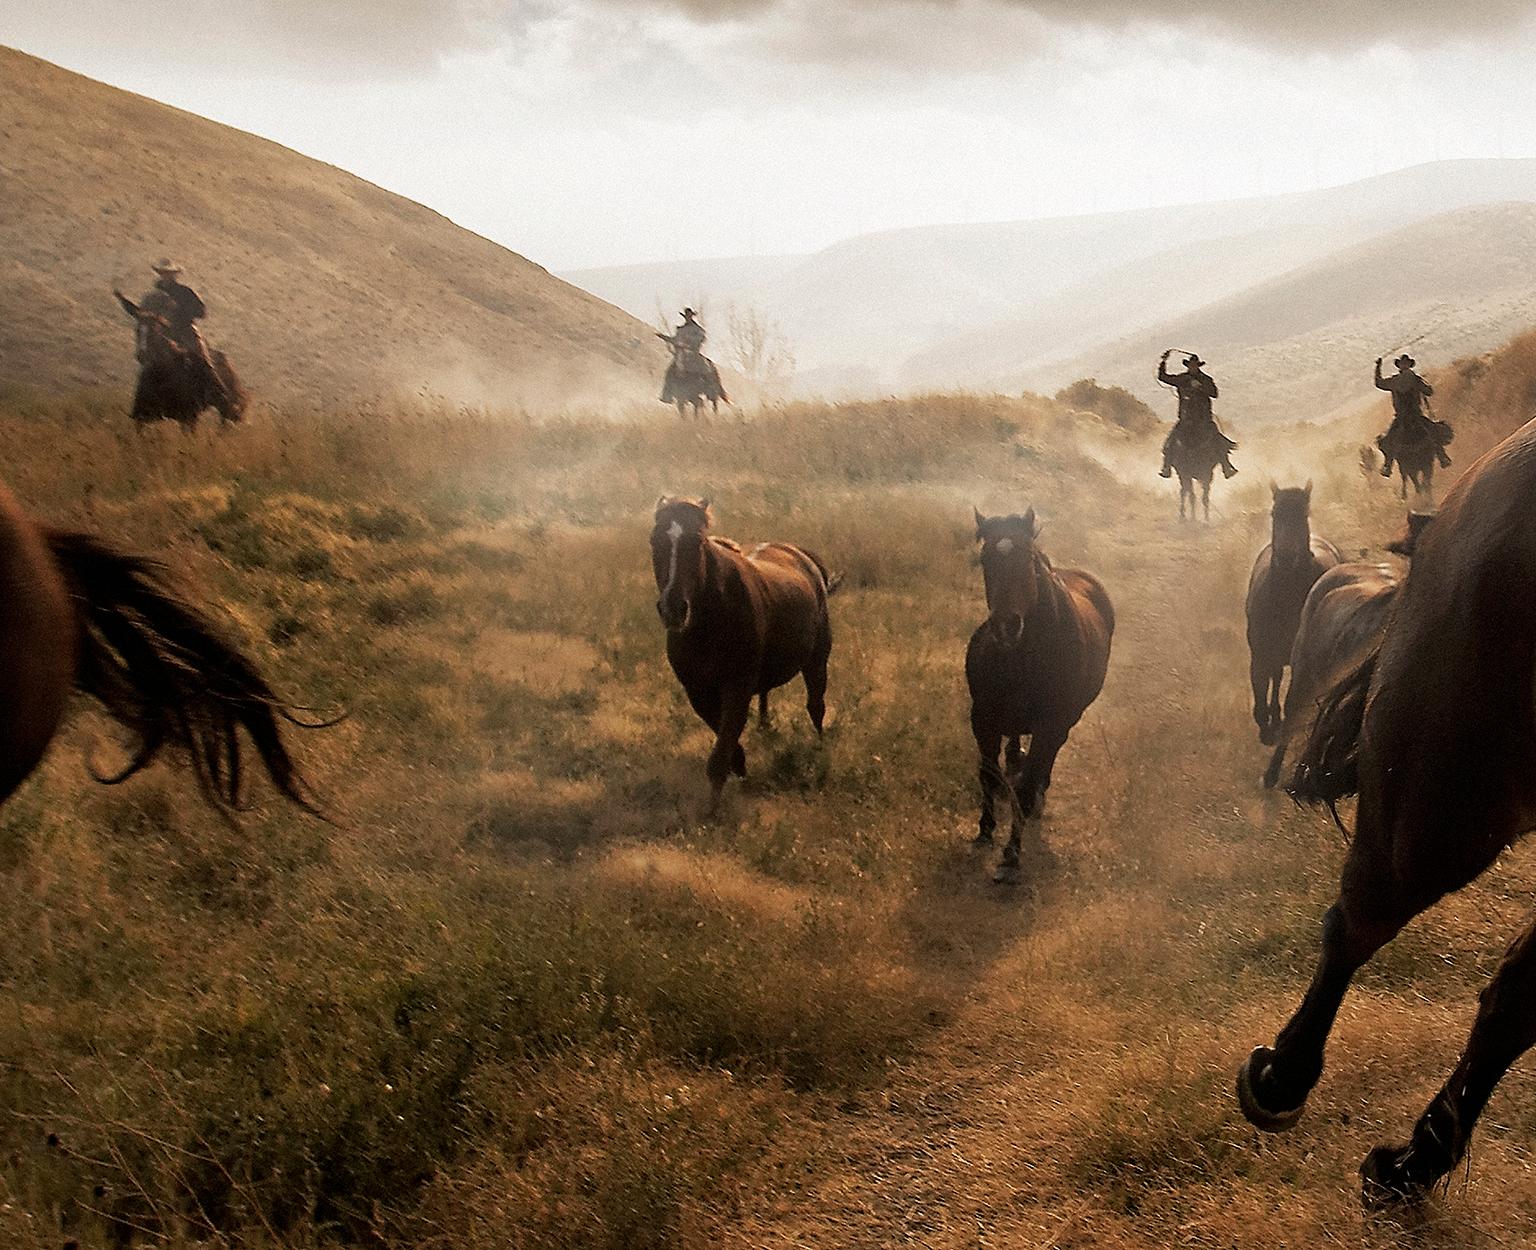 Horses, Wala Wala - Photograph by Chris Gordaneer